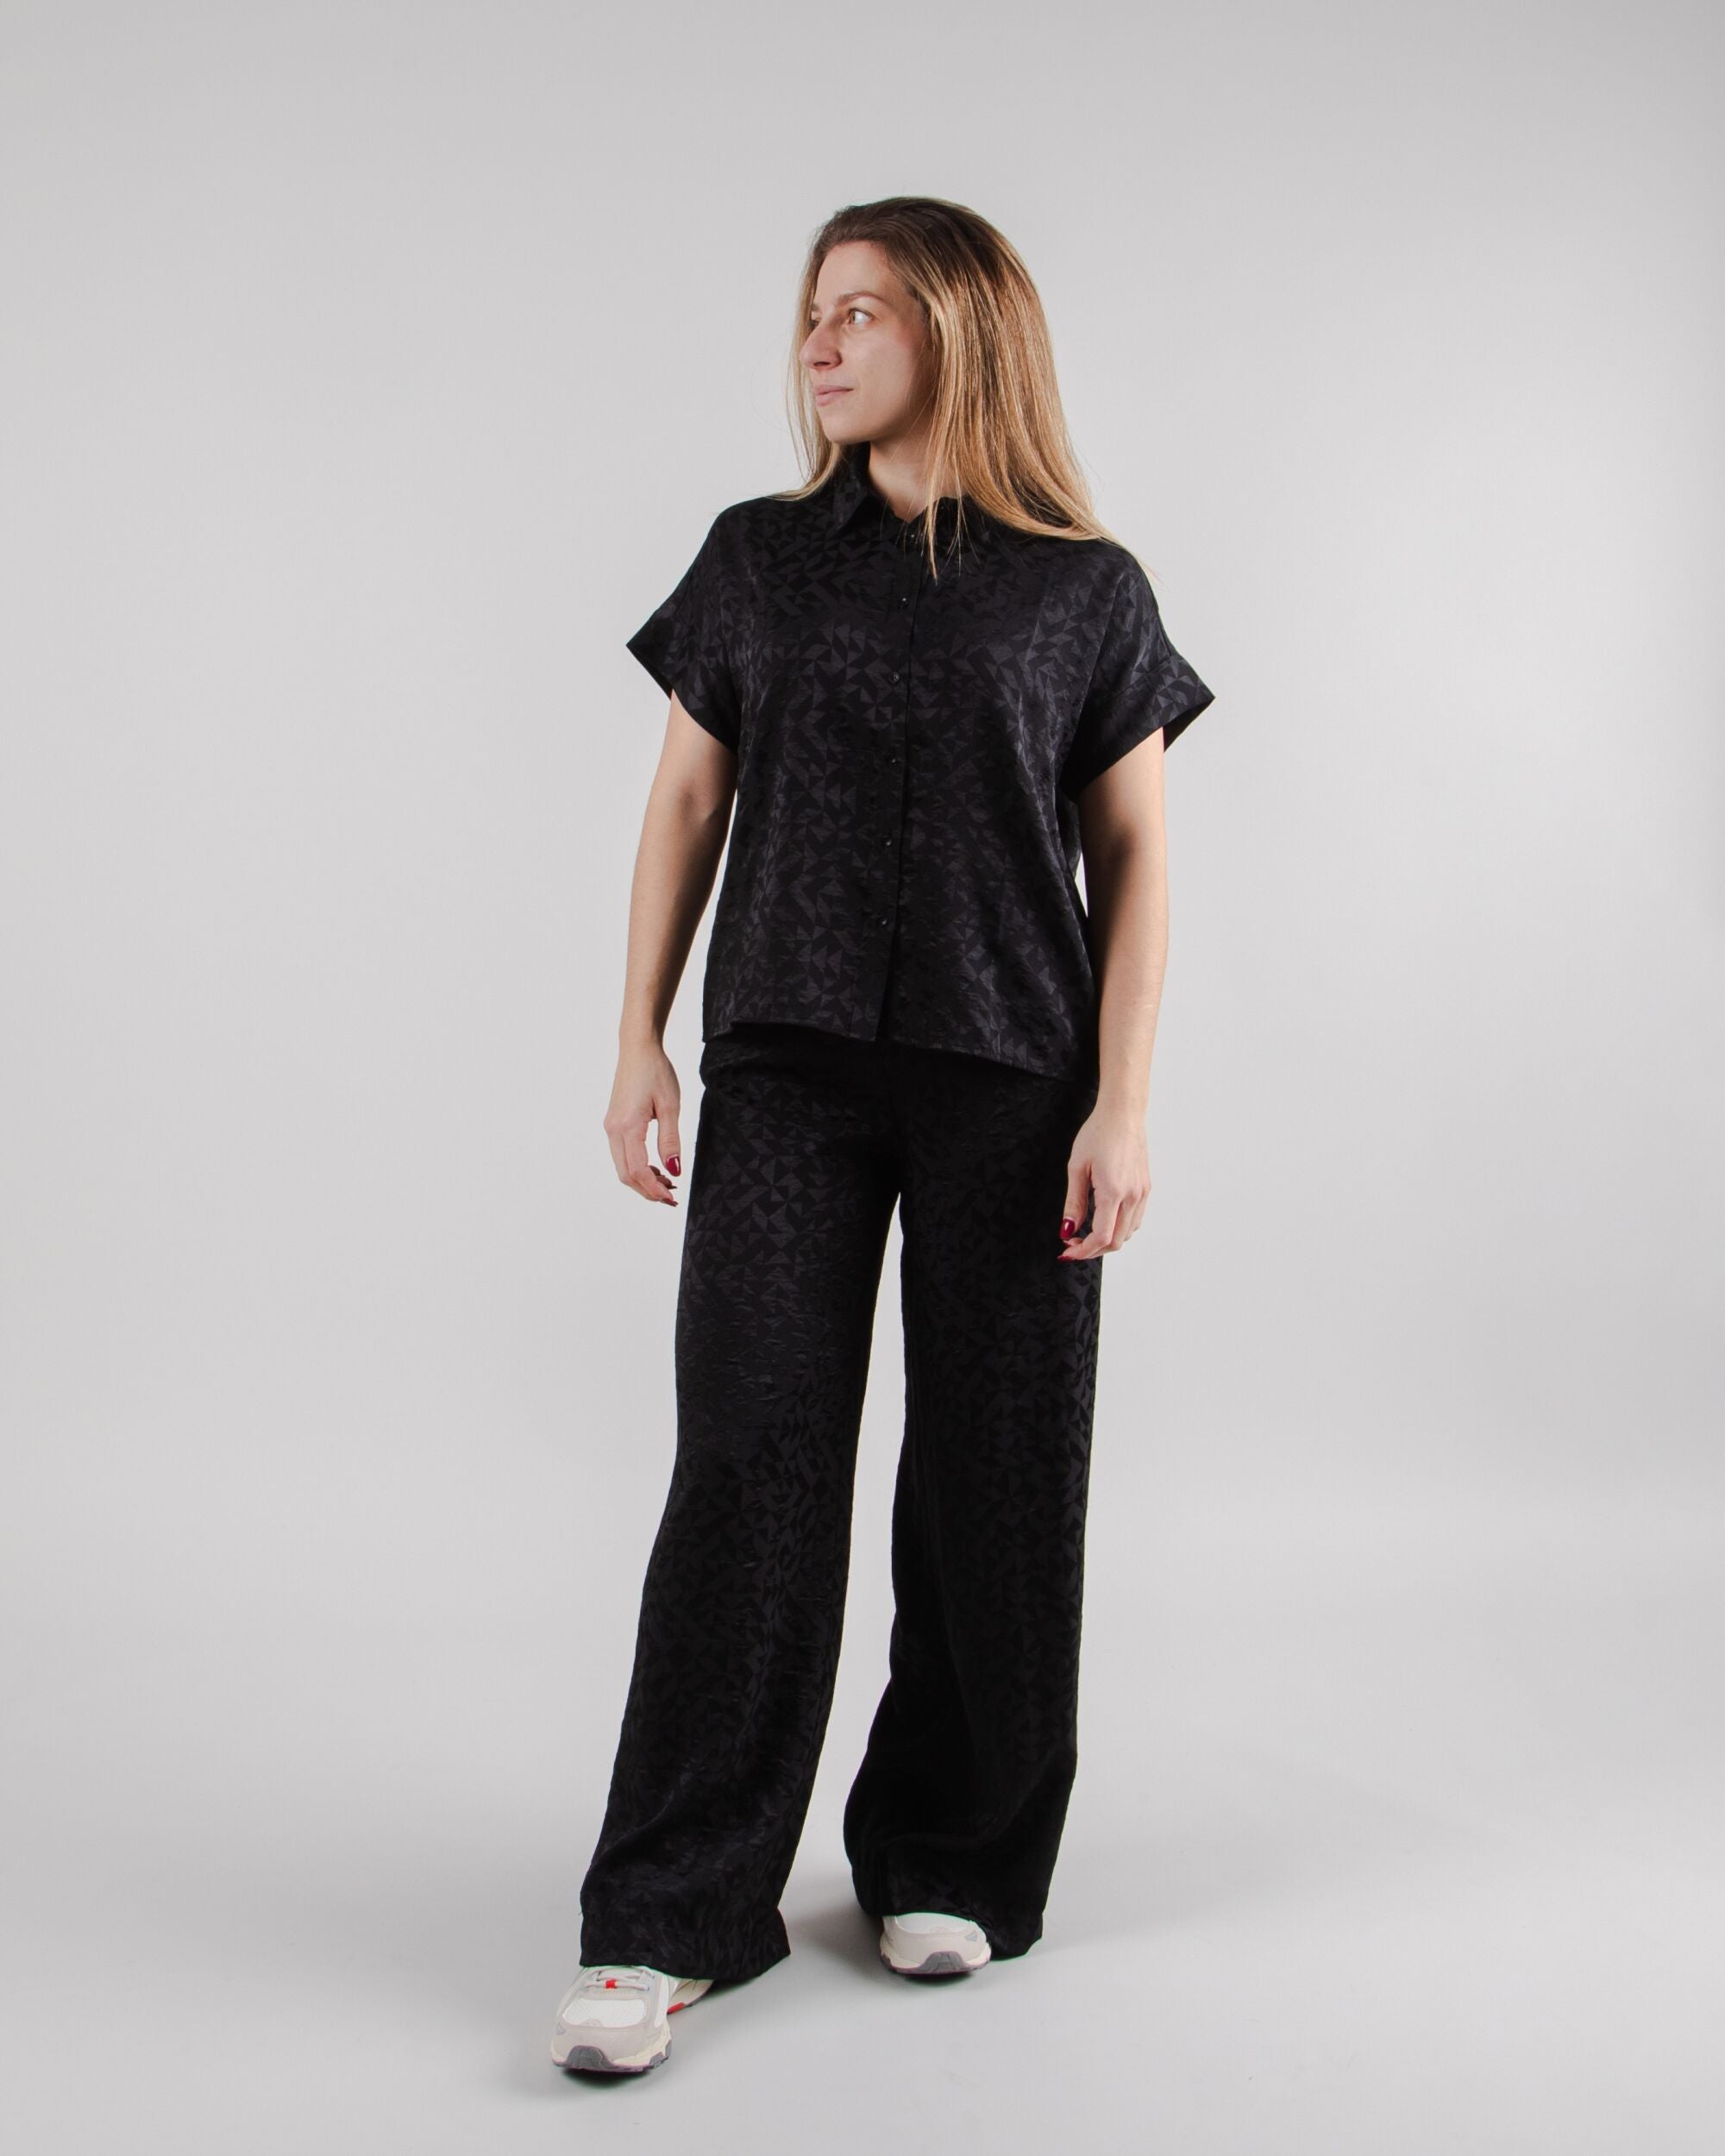 Jacquard batwing sleeve blouse in black from Brava Fabrics